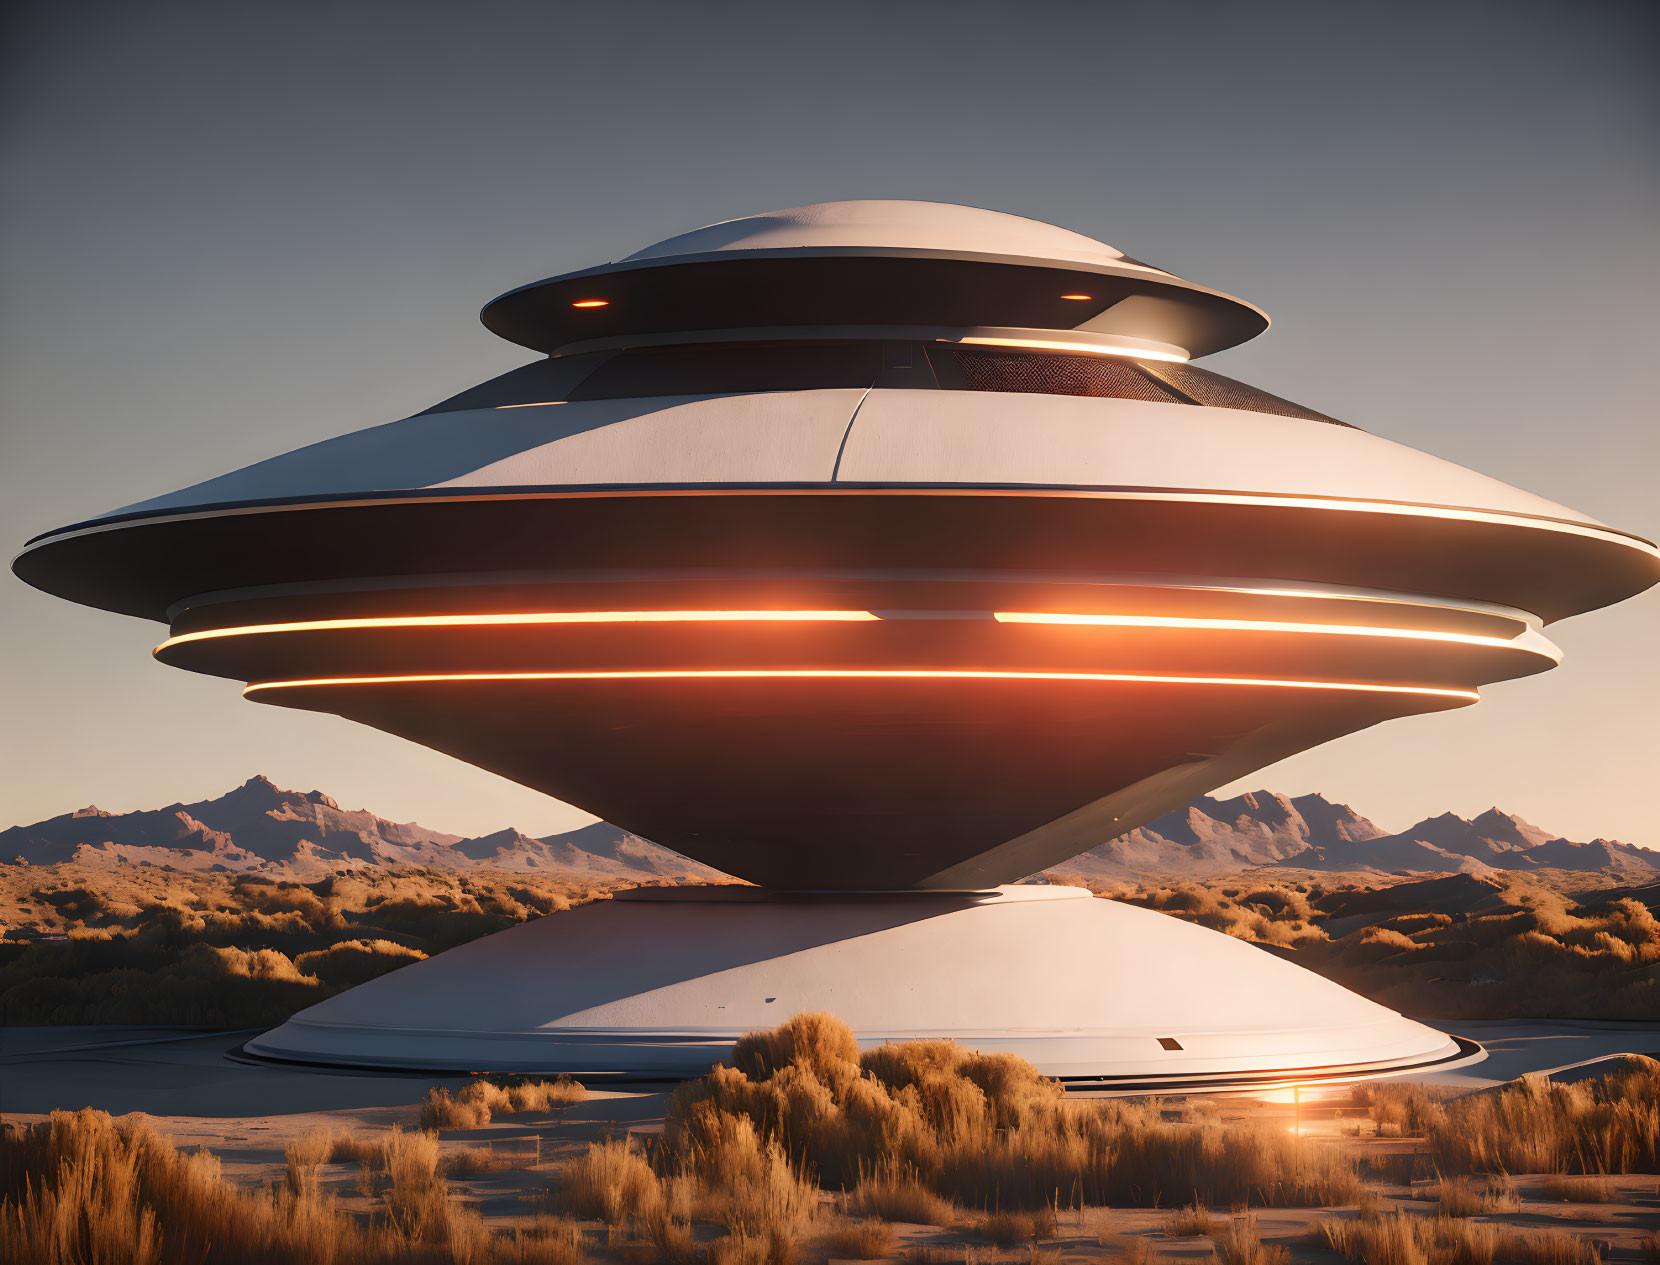 Futuristic glowing UFO-like structure in desert landscape at dusk